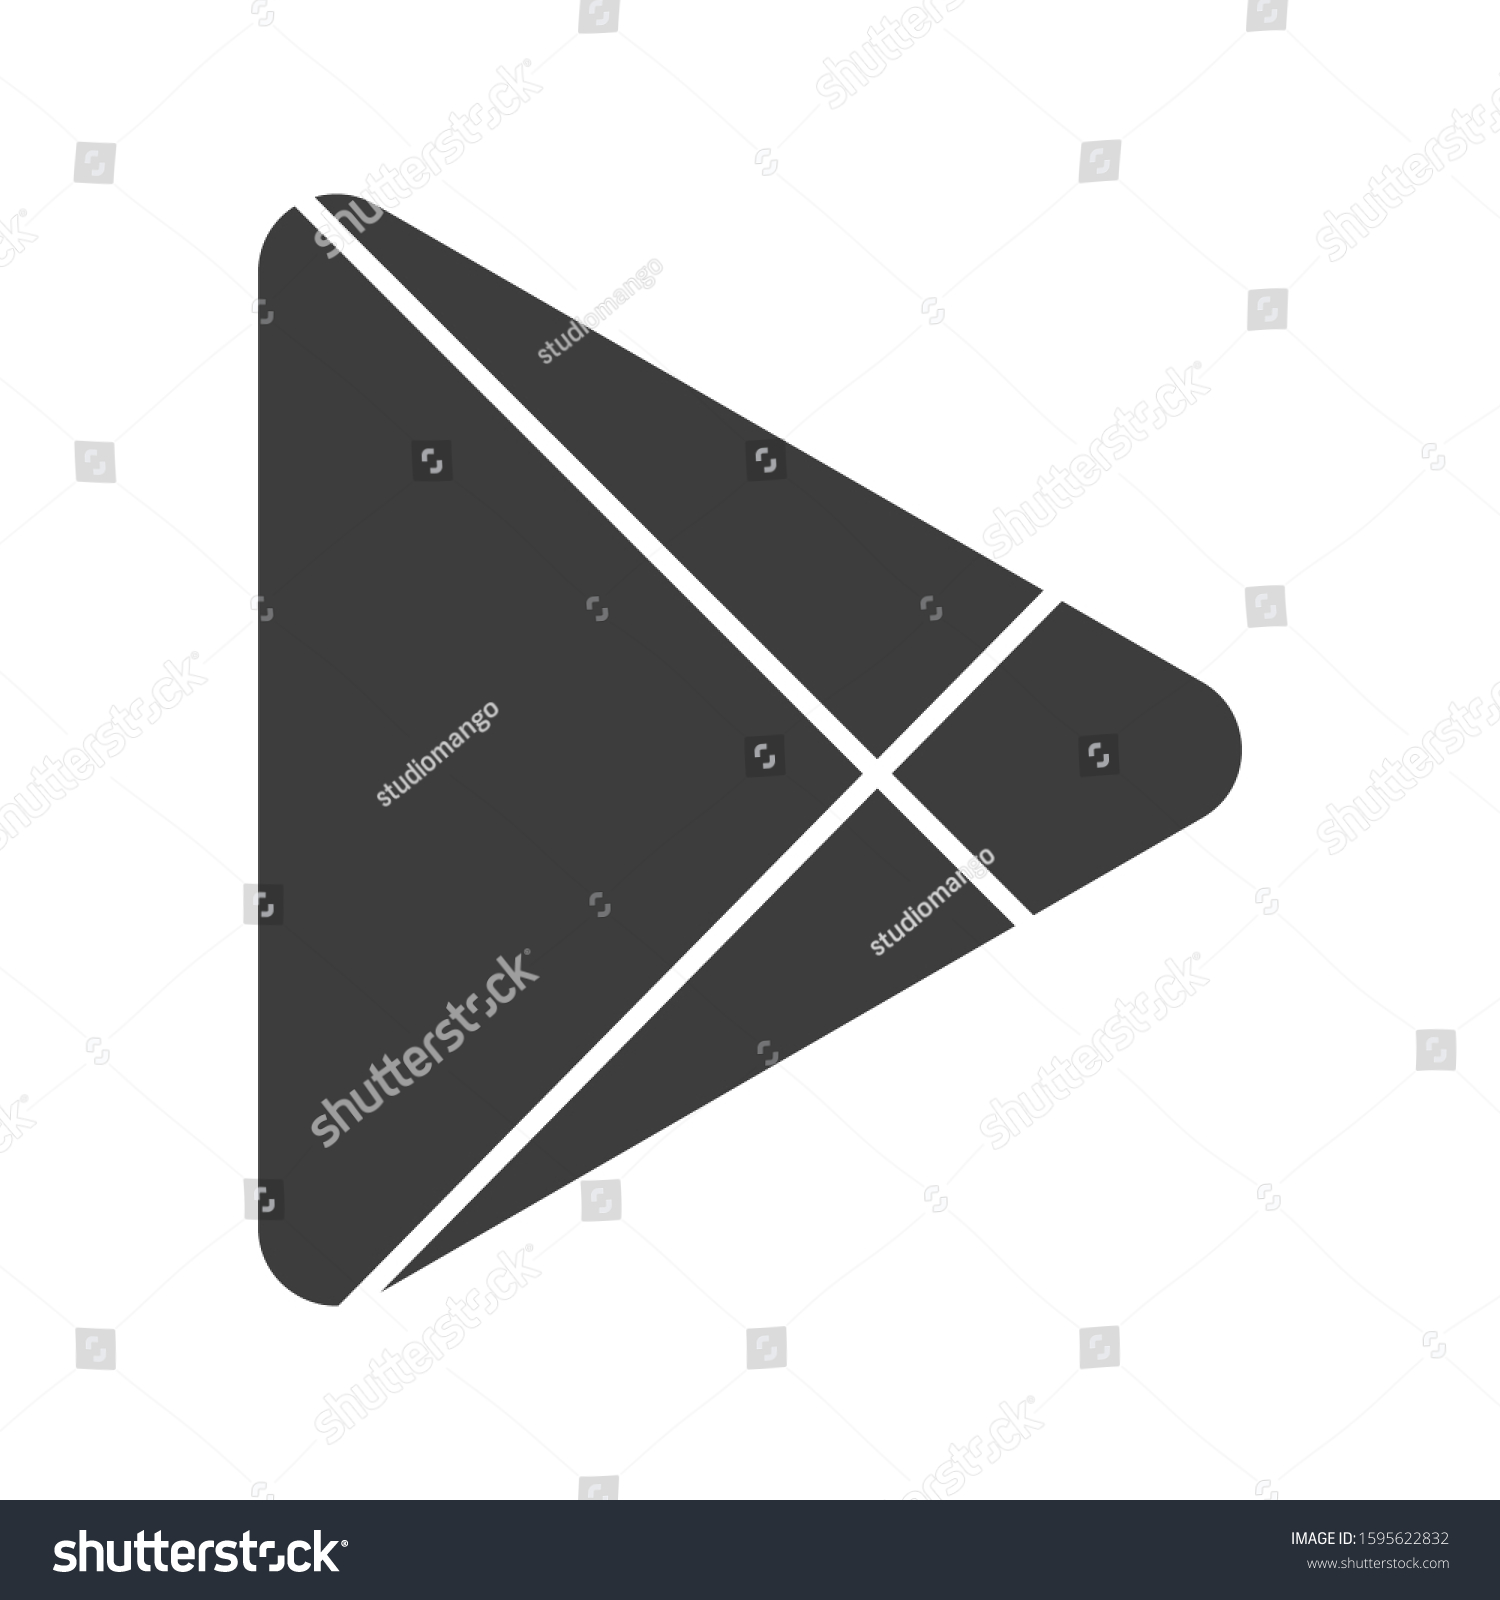 Abstract modern triangular abstract logo design.  #1595622832